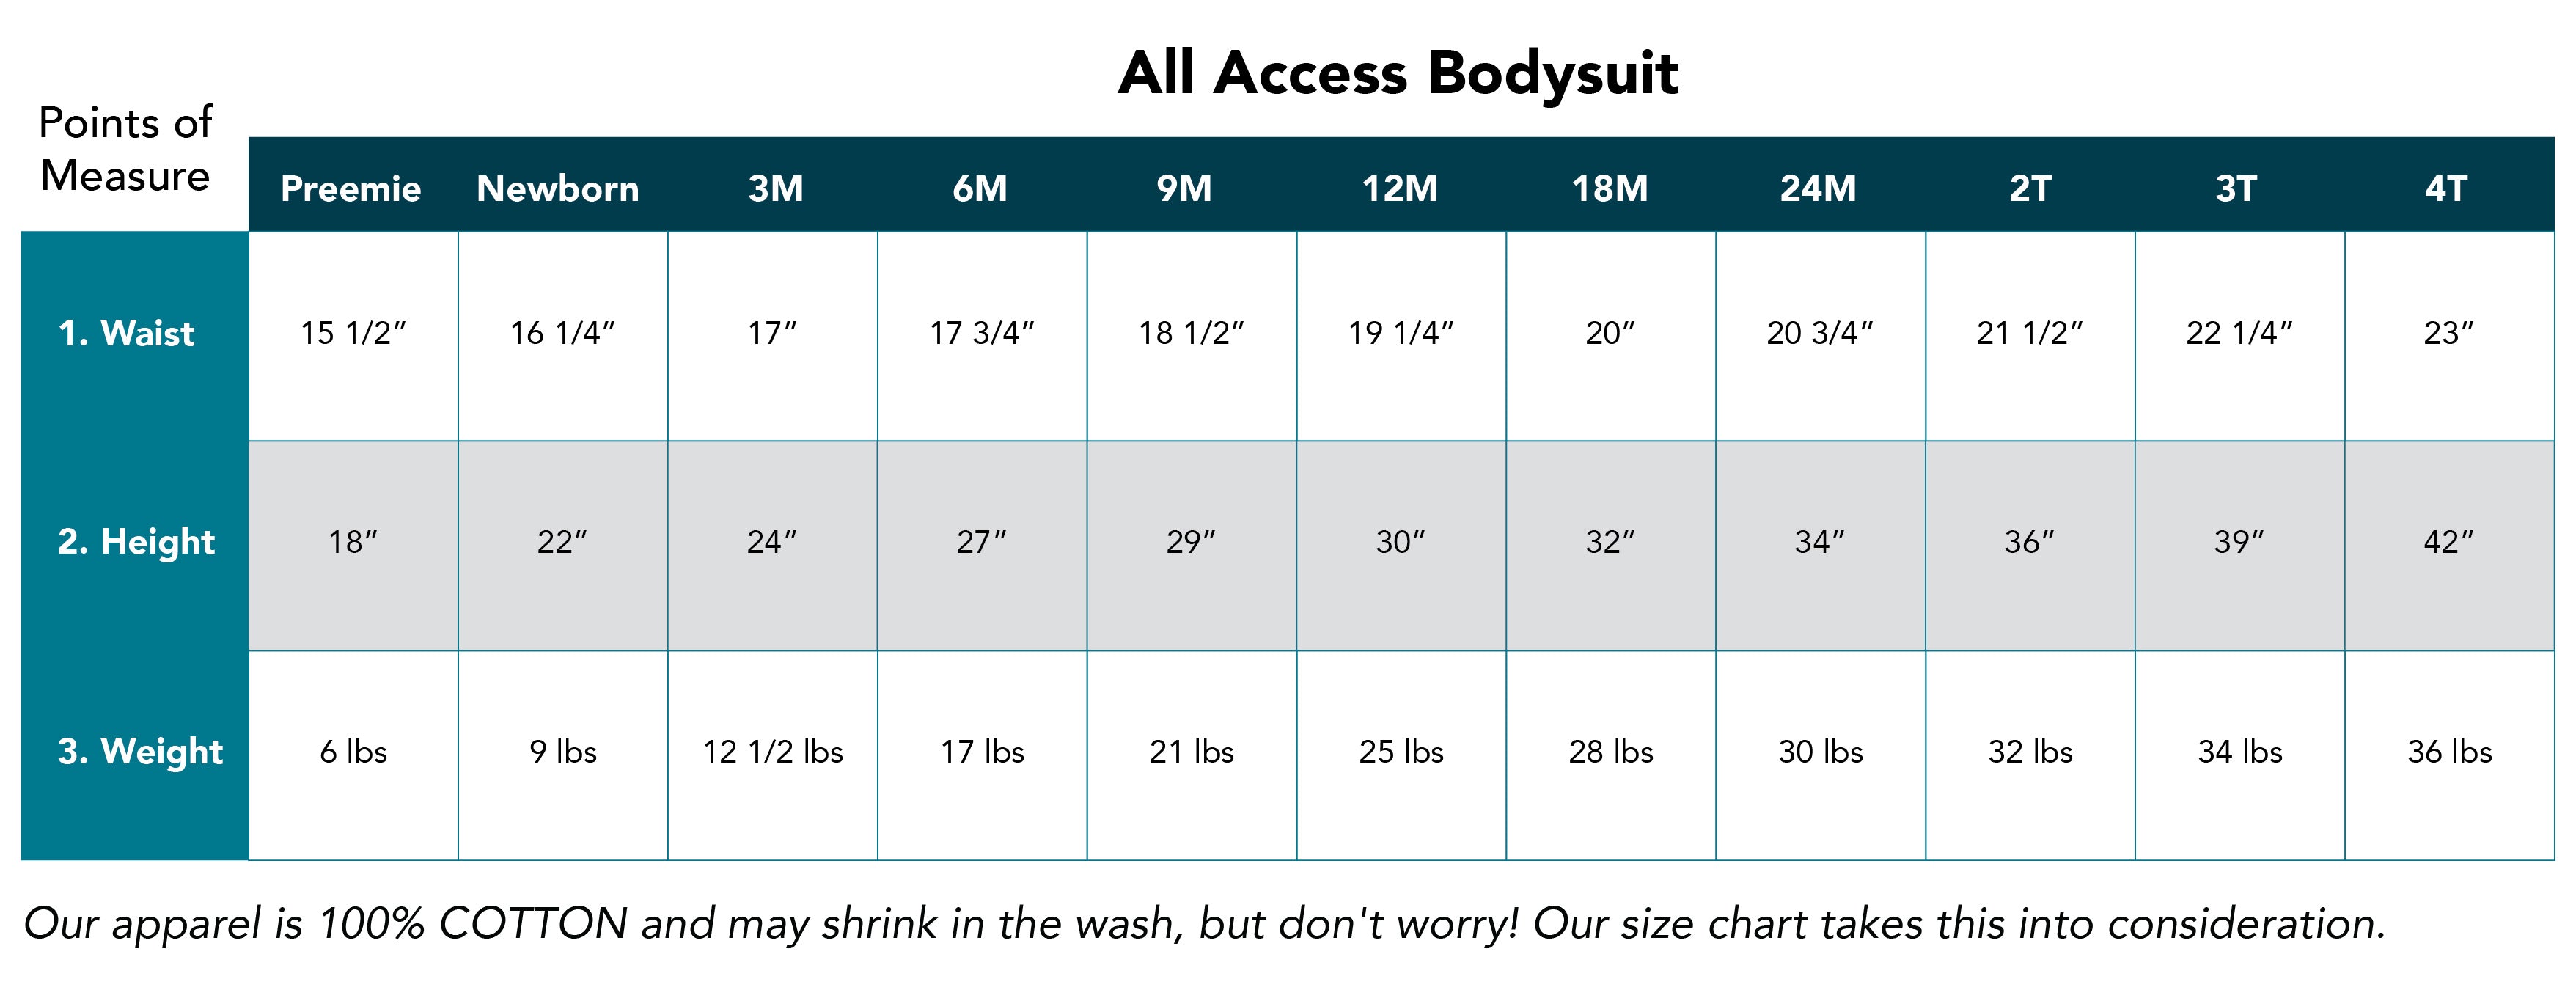 Mint Long-Sleeve All-Access Bodysuit | Preemie to 4T | G-Tube, Catheter, NICU/PICU, Port-friendly adaptive clothing